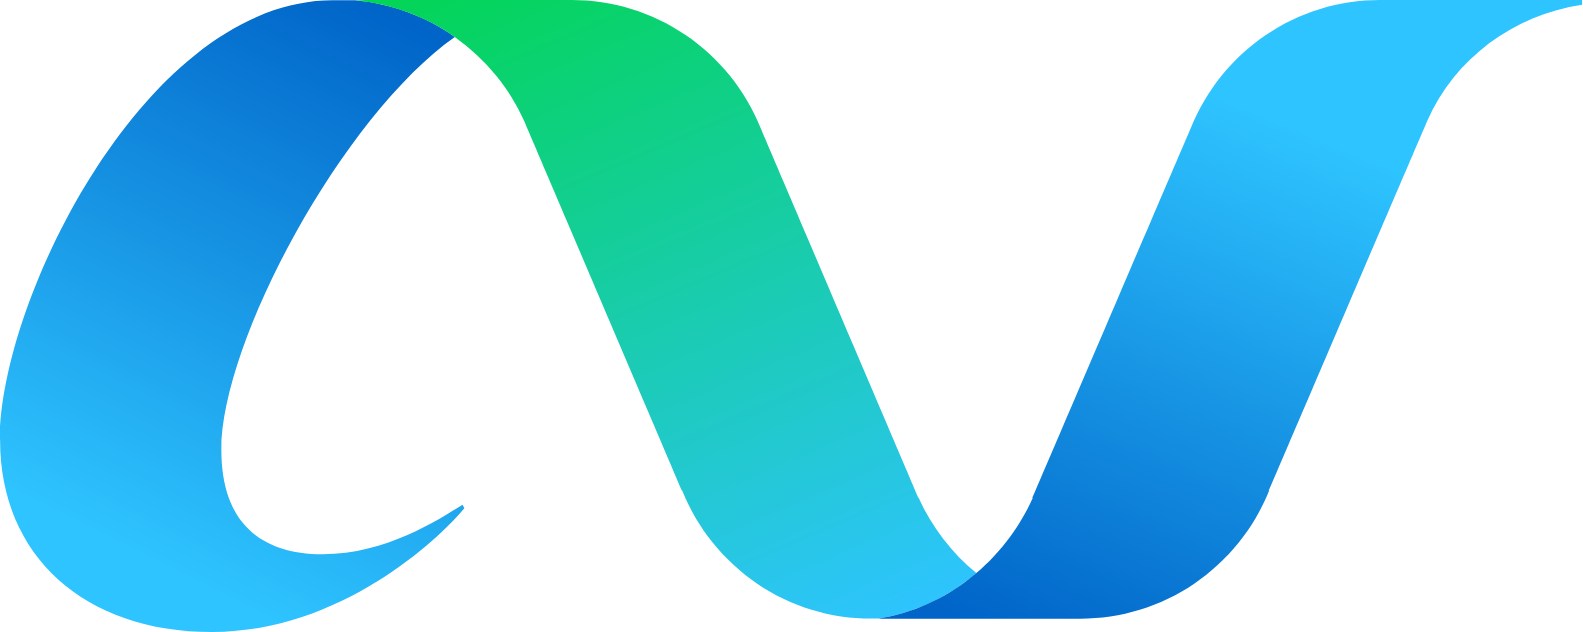 Avantor logo (transparent PNG)